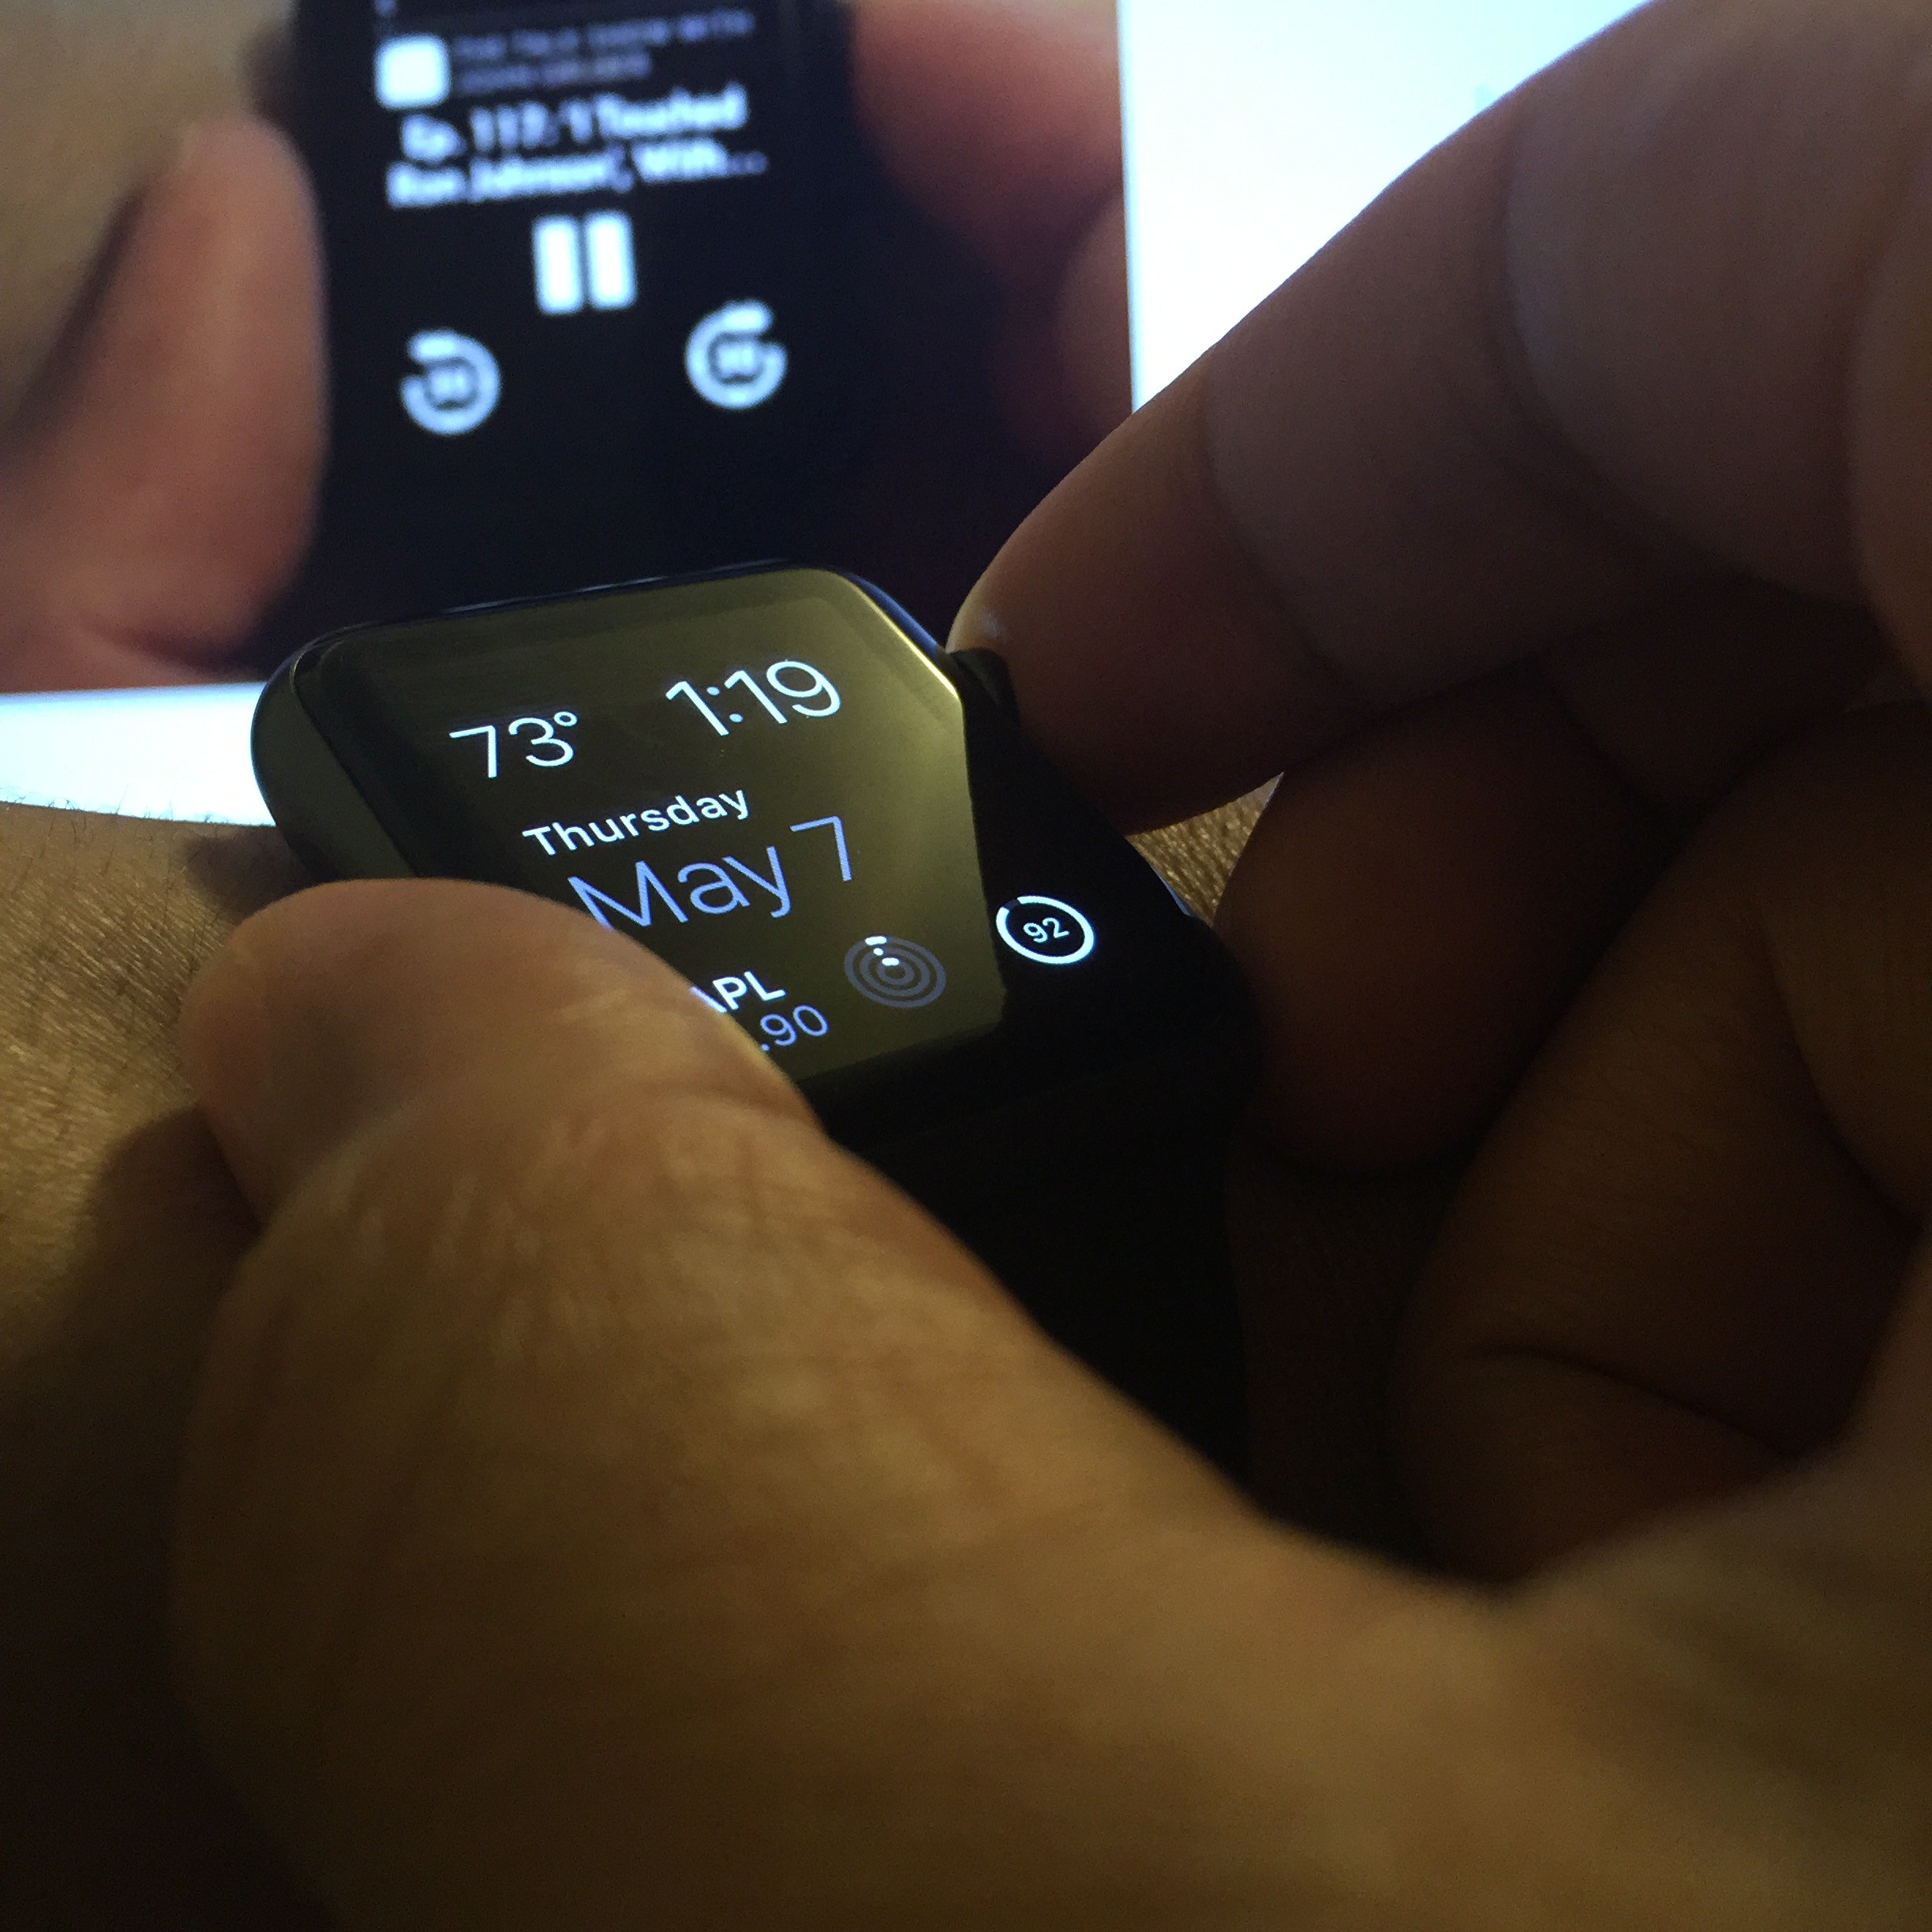 Apple Watch switch between apps